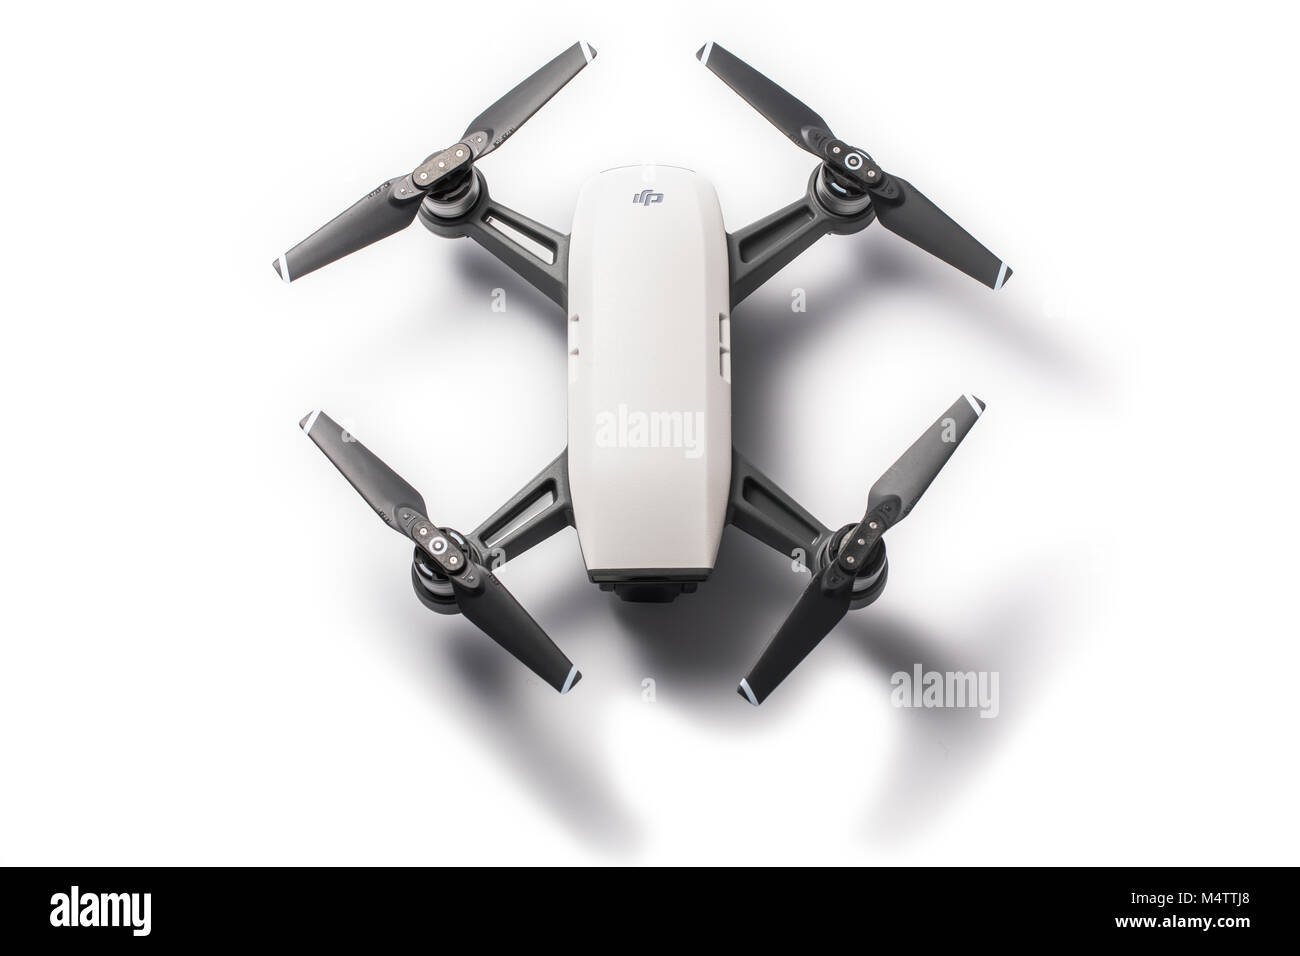 Varna, Bulgarien - 17. Februar 2018: Flying drone quadcopter Dji Spark ist mini Drone, verfügt über alle dji Signatur Technologien, auf Wh isoliert Stockfoto